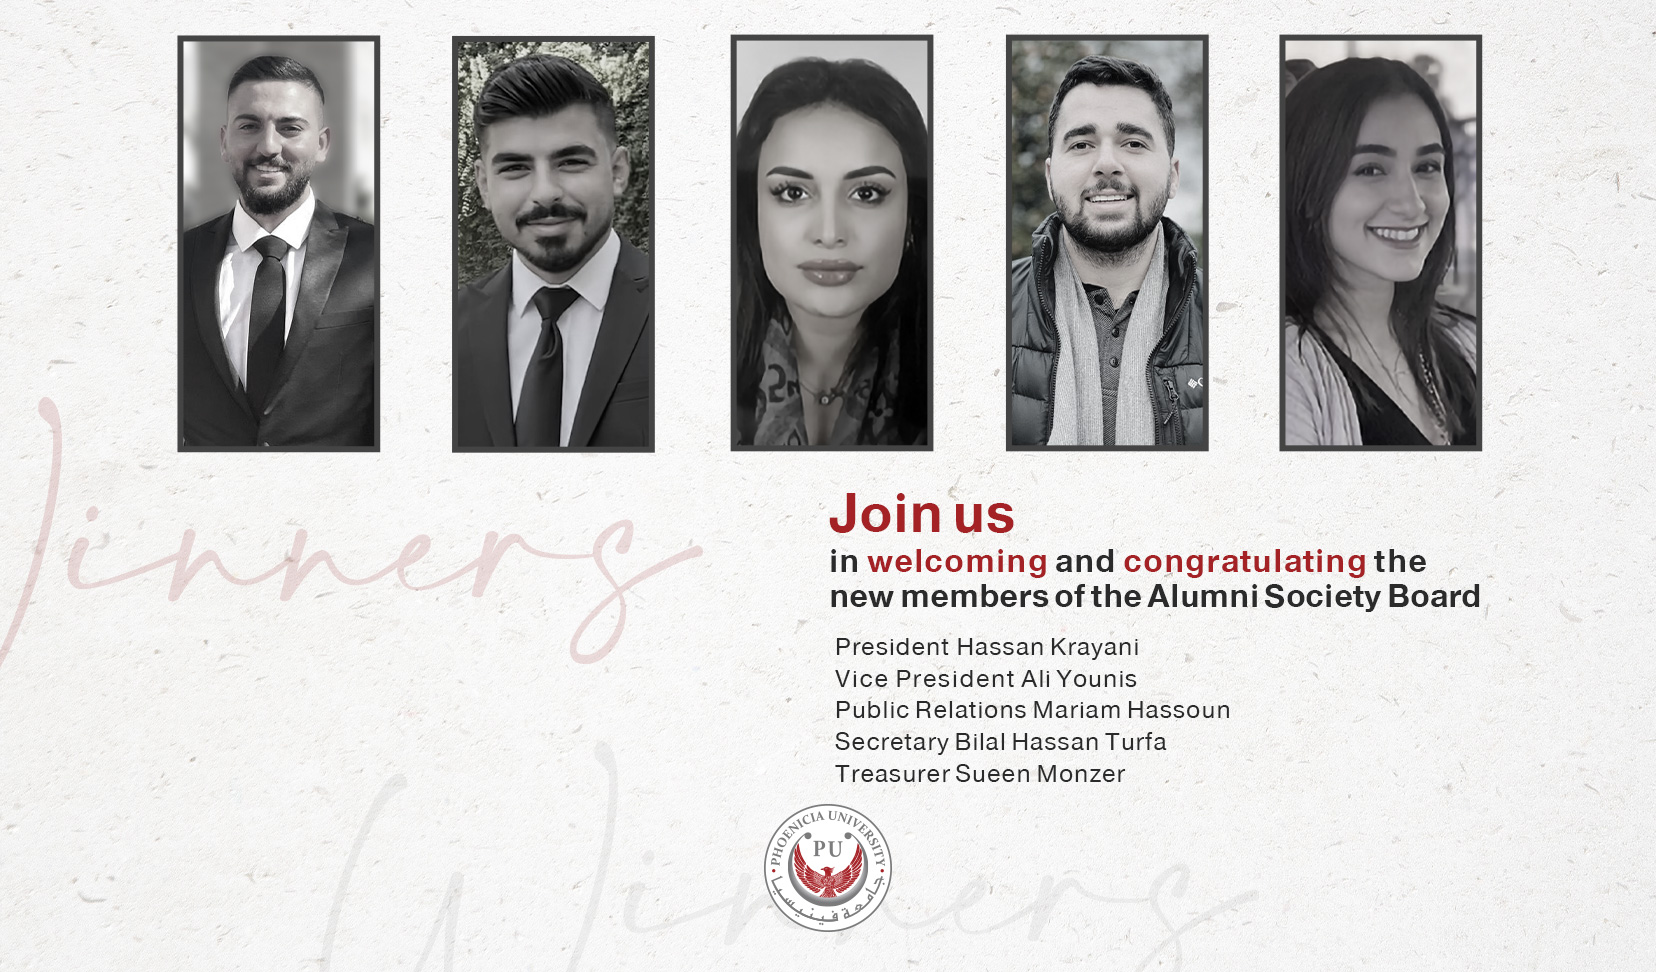 Alumni Society Board